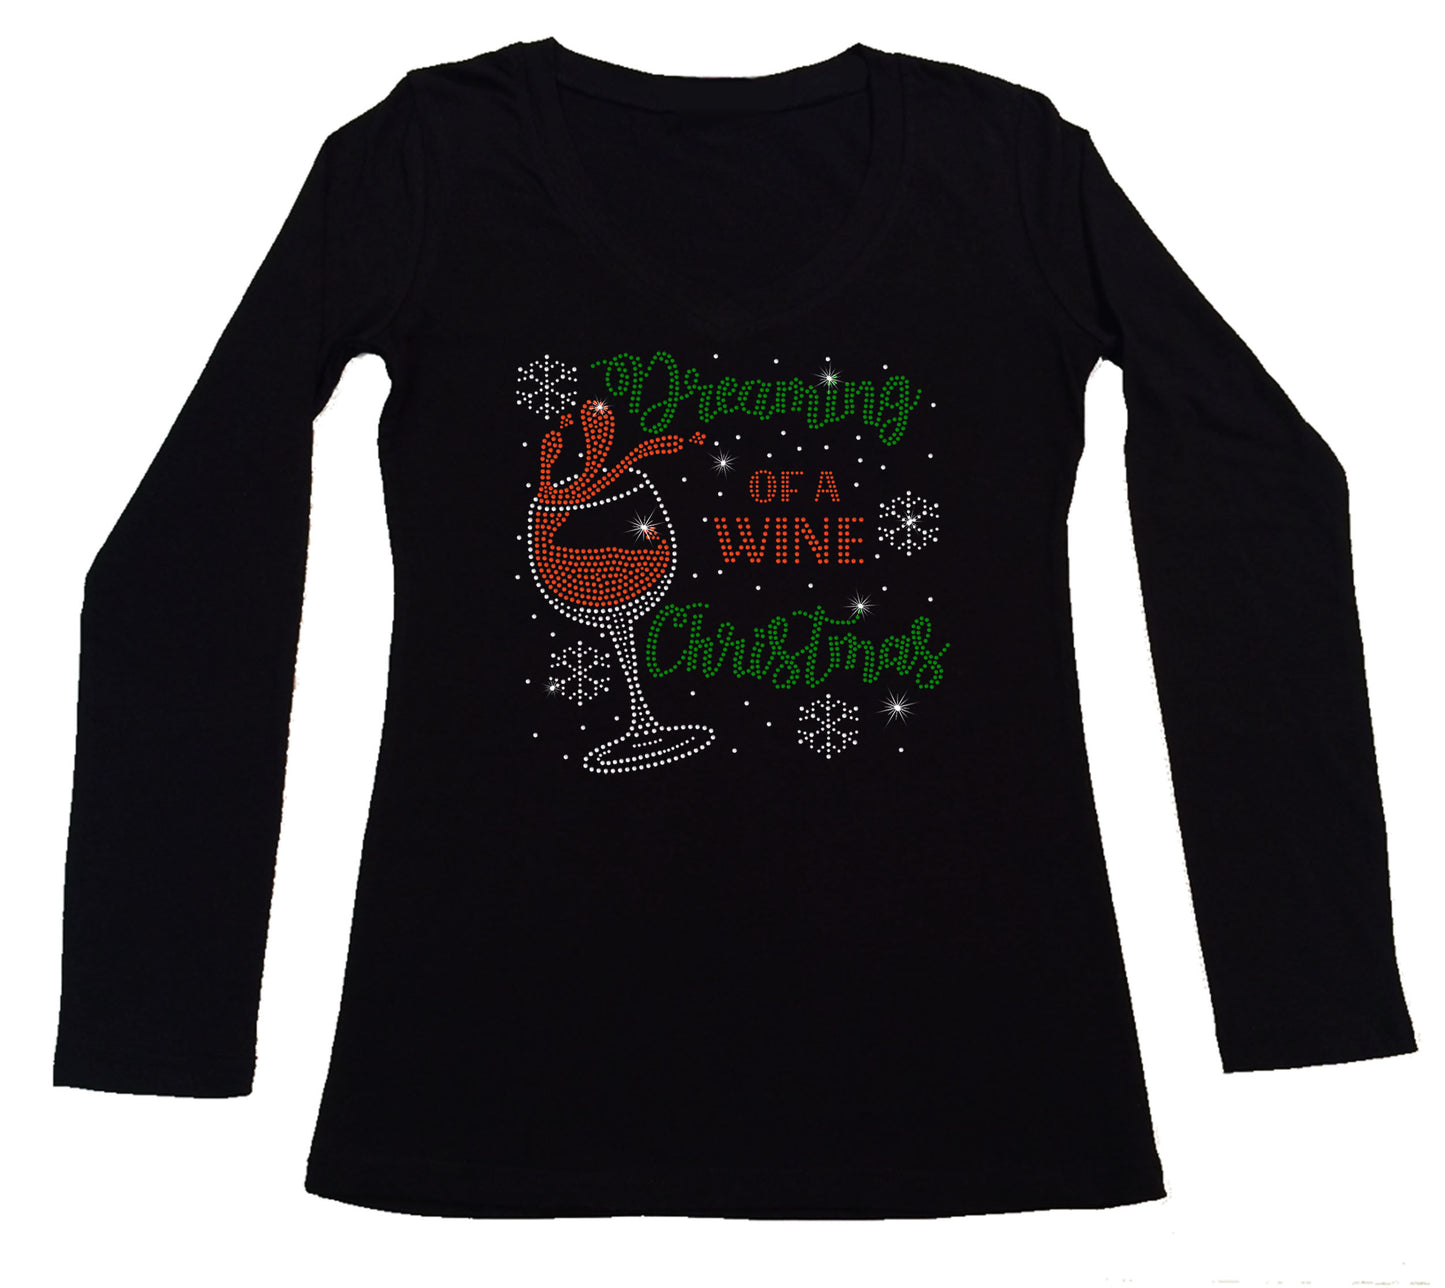 Women's Rhinestone Fitted Tight Snug Shirt Dreaming of a Wine Christmas - Wine Shirt, Christmas Shirt, Rhinestone Shirt